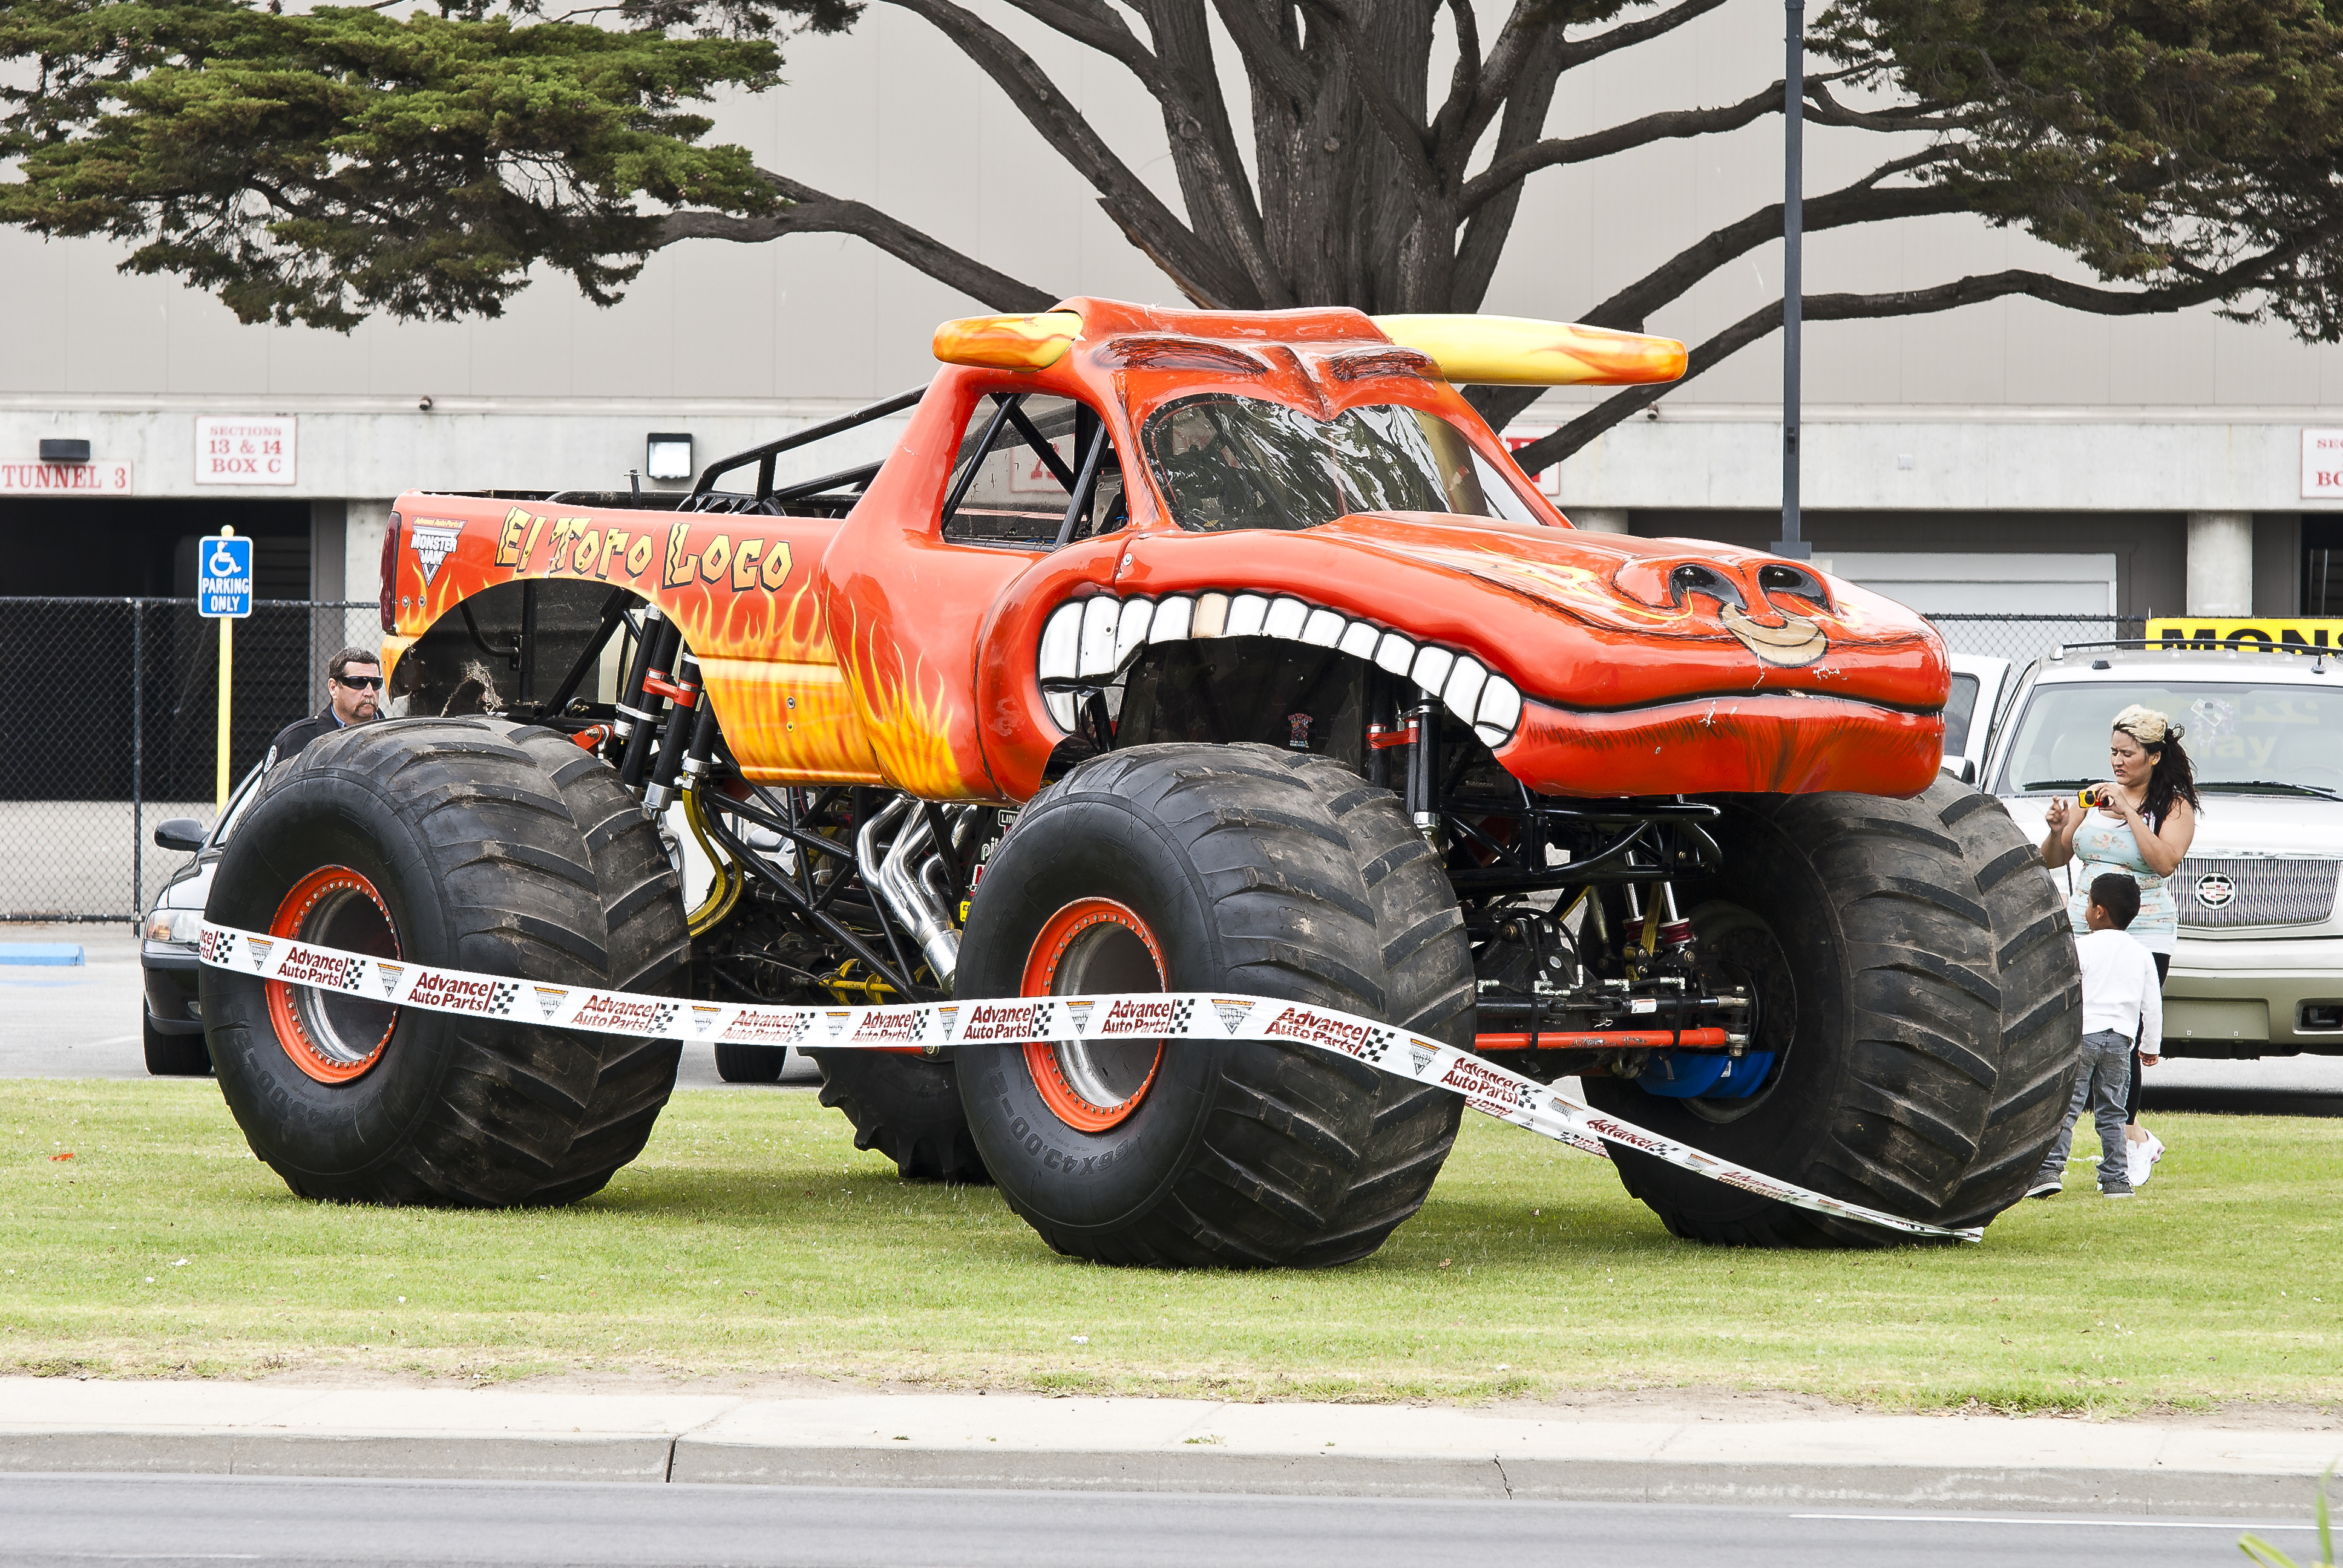 El Toro Loco Monster Truck by BrandonLee88 on DeviantArt.